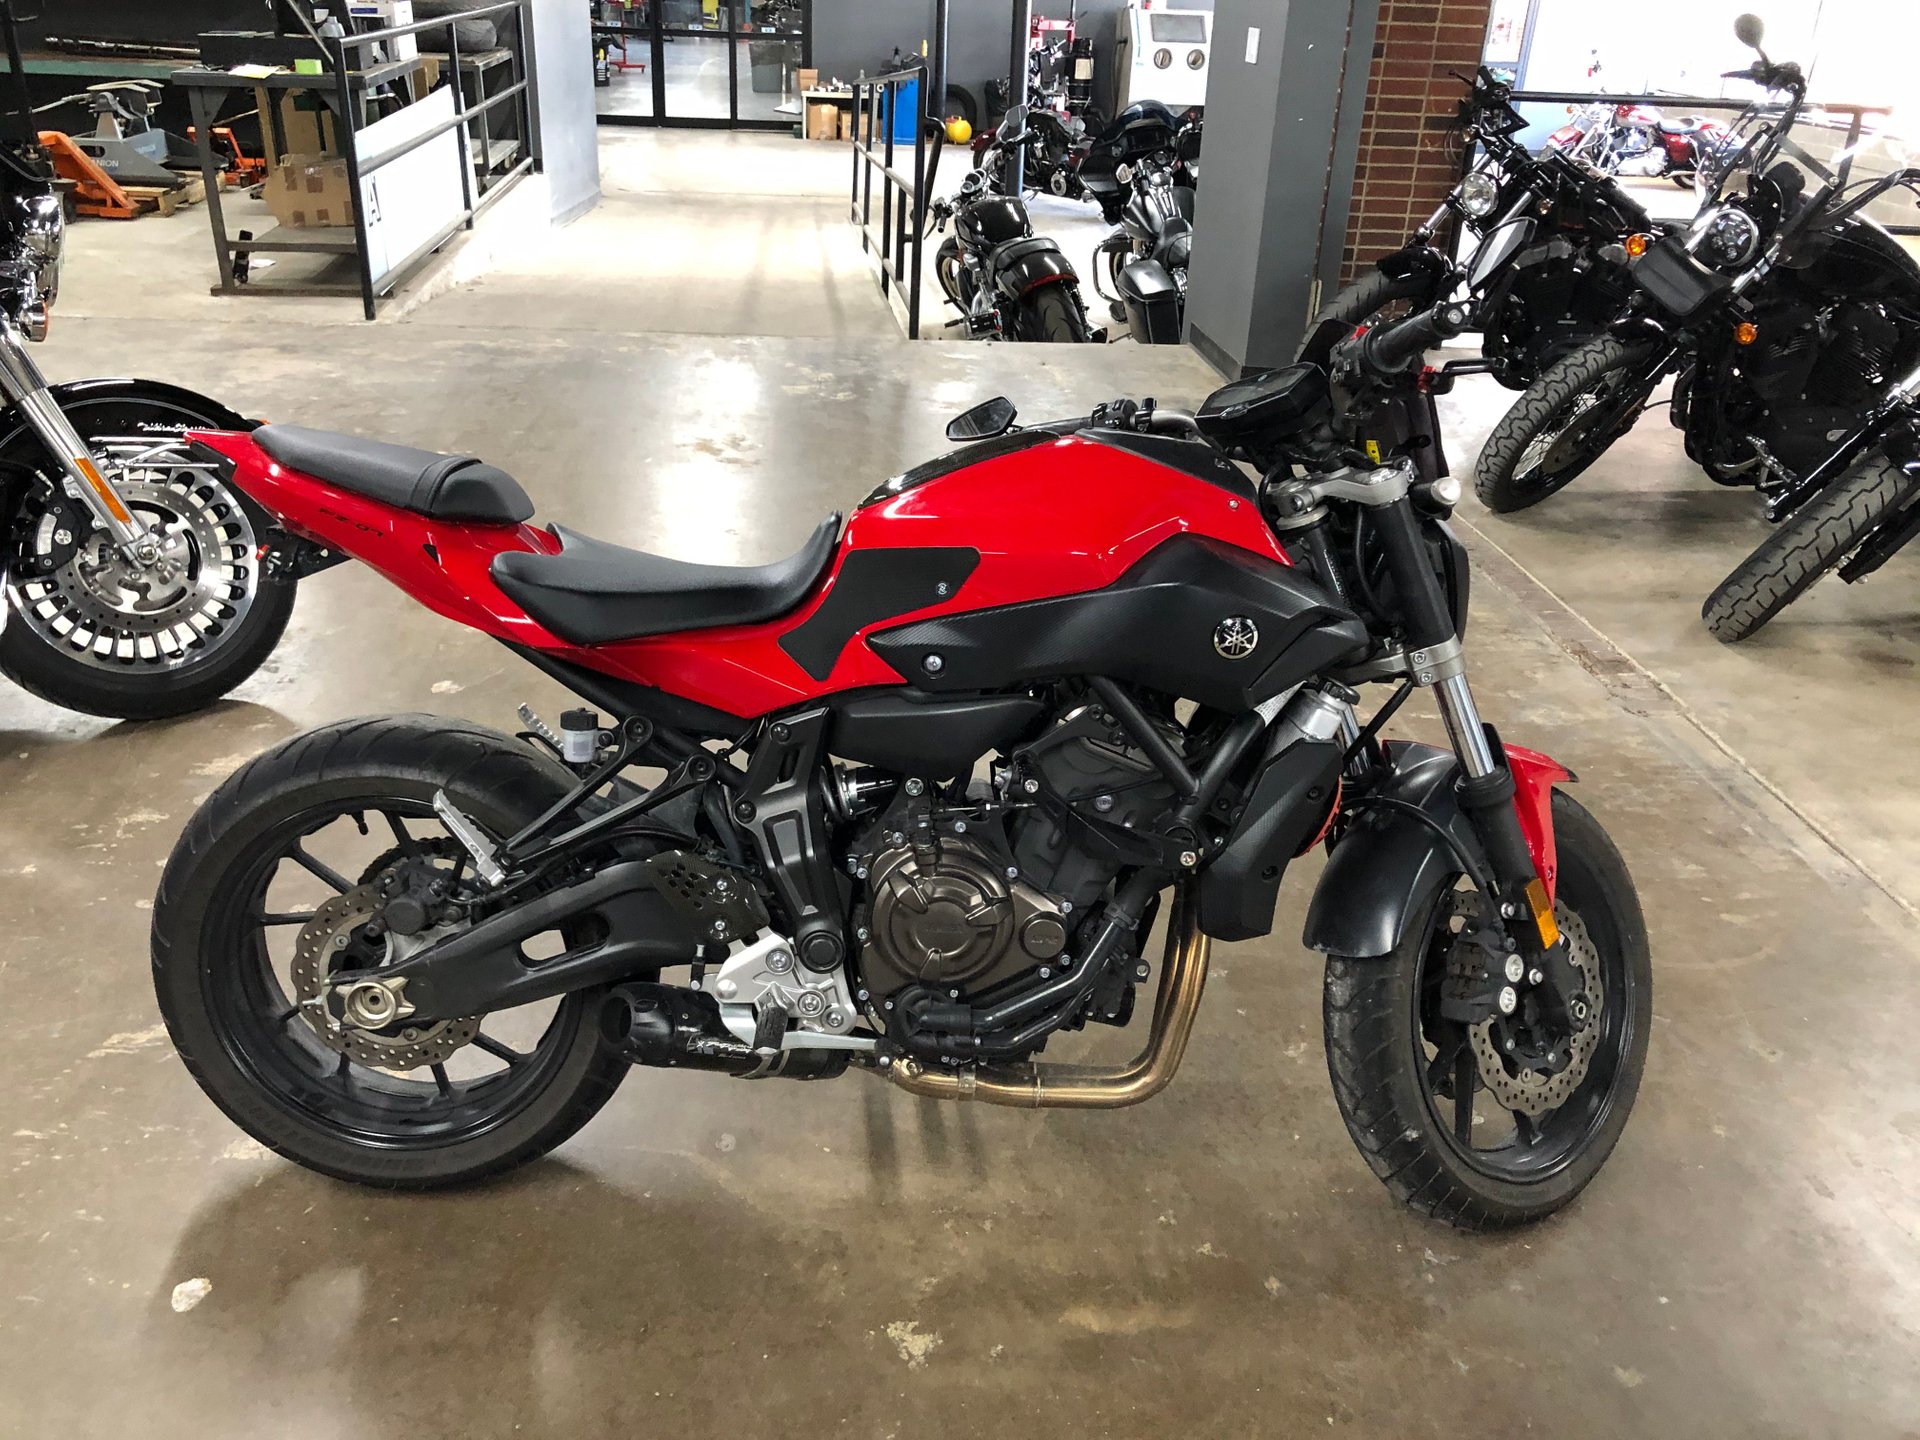 2017 Yamaha FZ-07 | American Motorcycle Trading Company - Used Harley ...